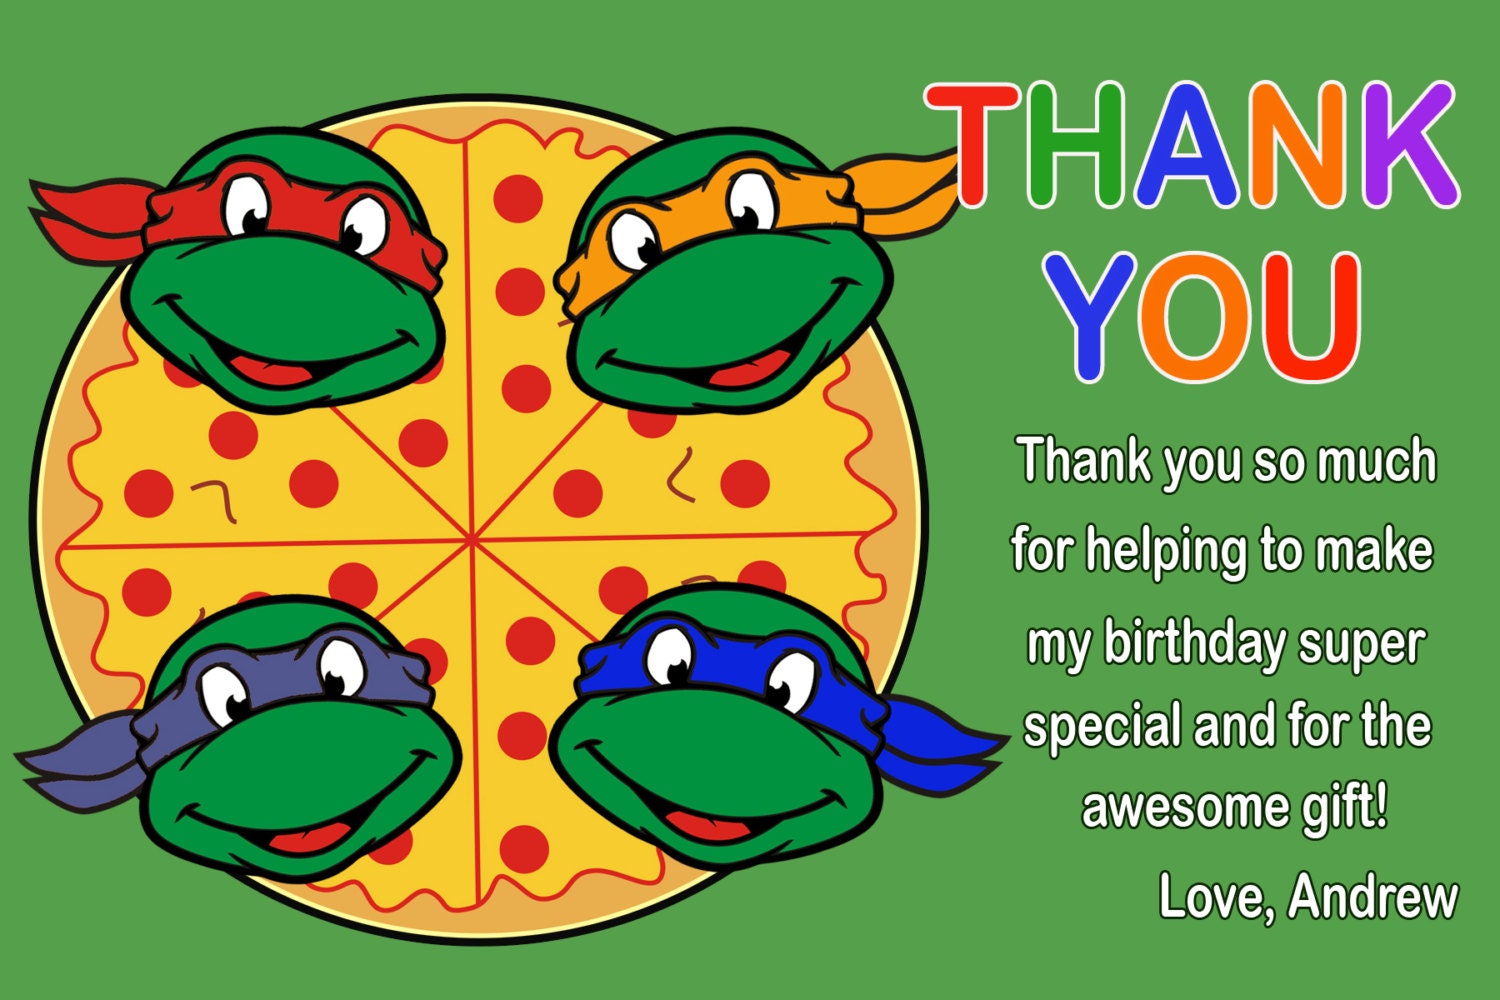 sale-tmnt-thank-you-card-ninja-turtles-thank-you-card